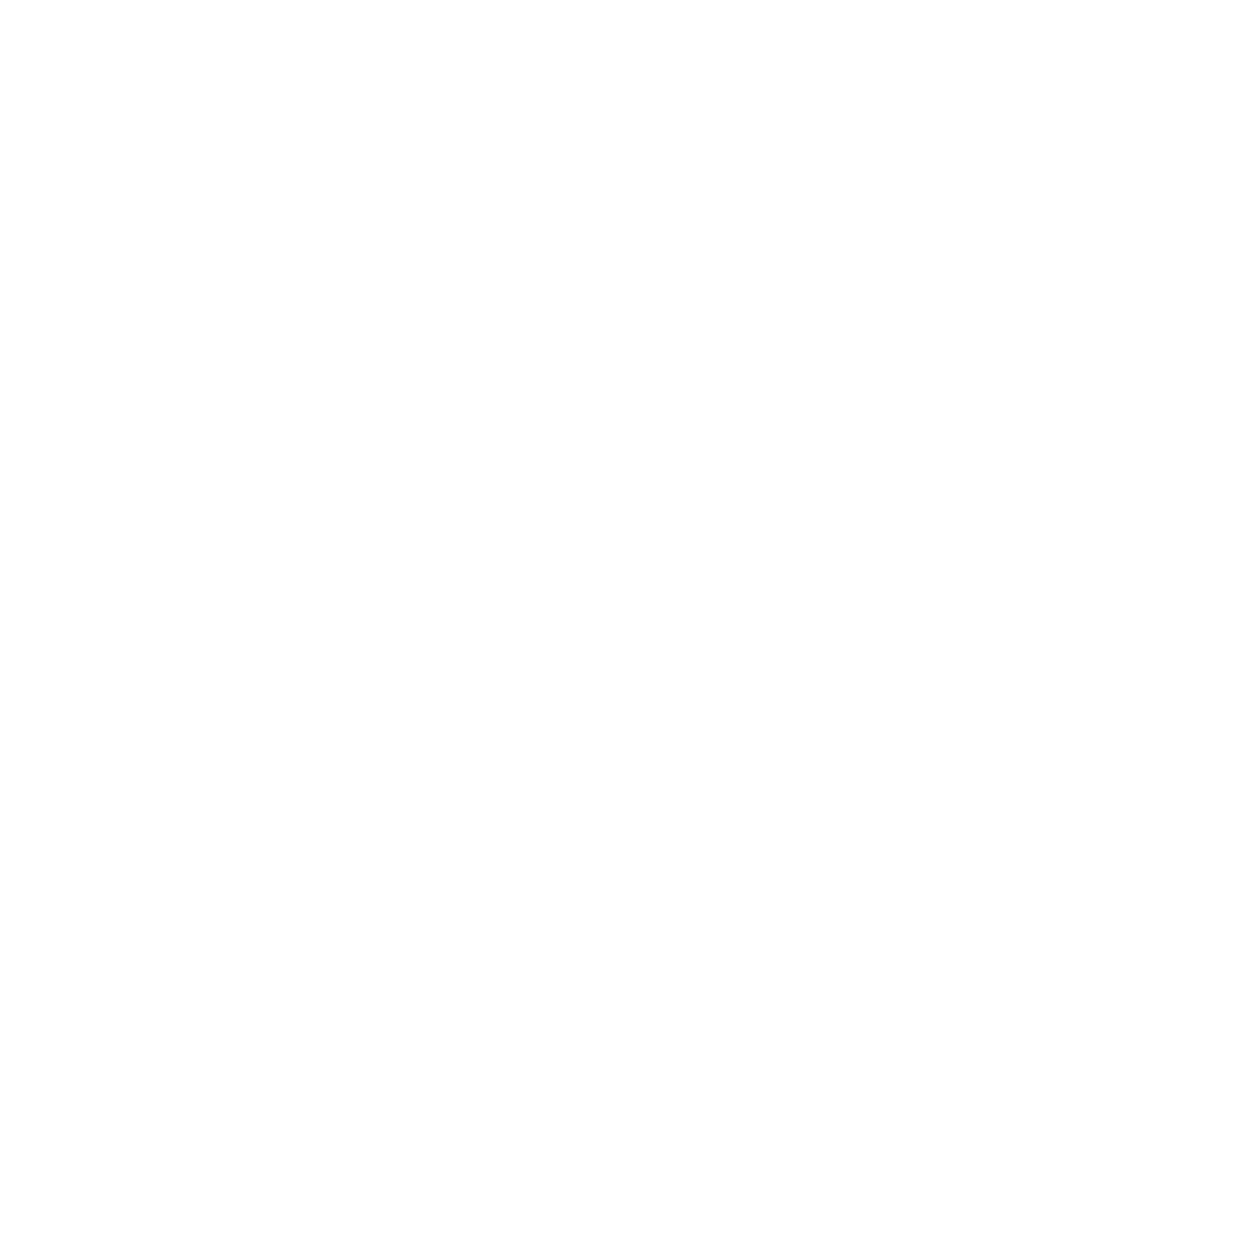 National Taipei University of Business